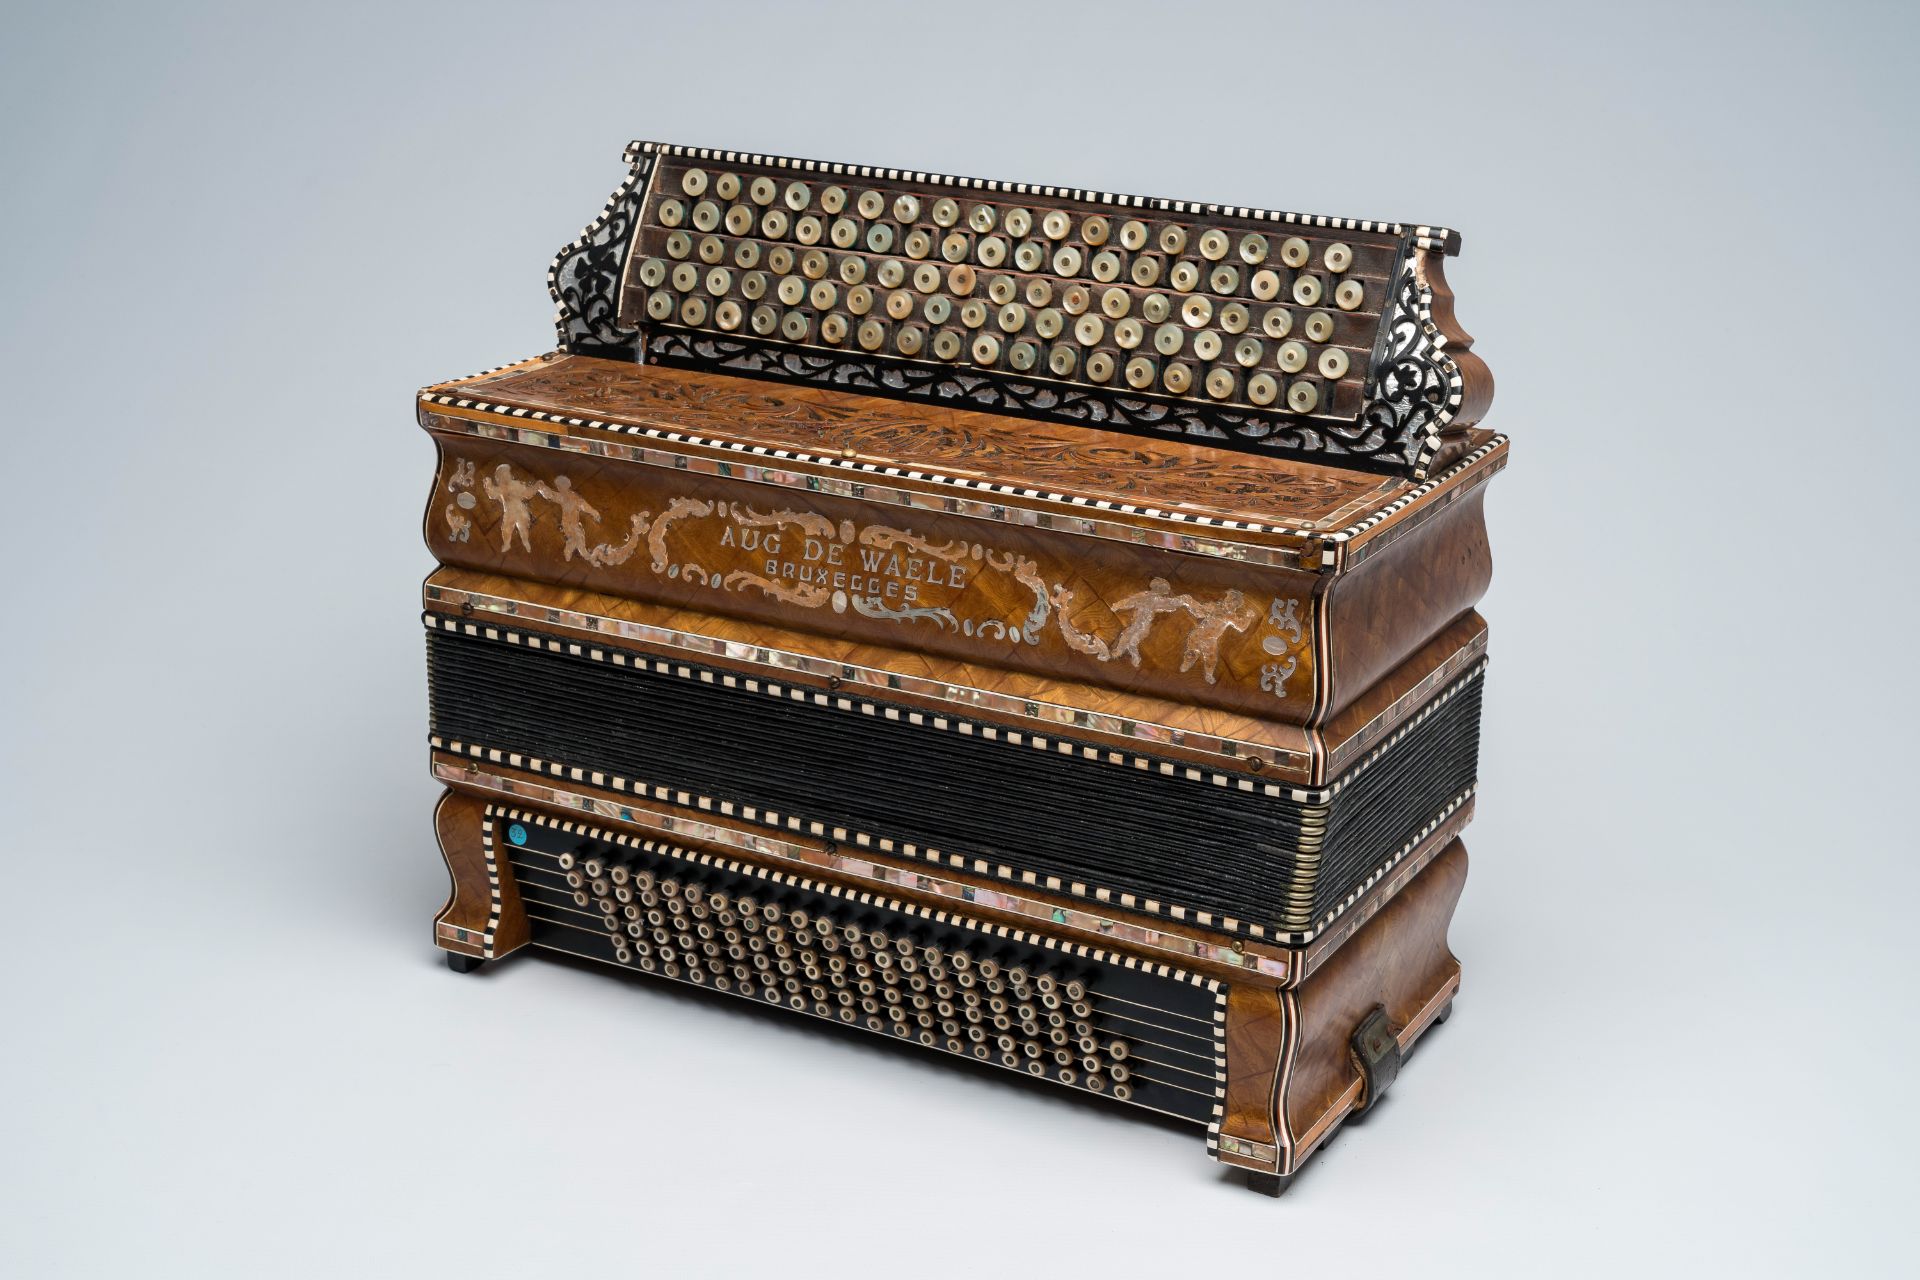 A Belgian 'August De Waele' chromatic accordion with button keyboard, ca. 1920